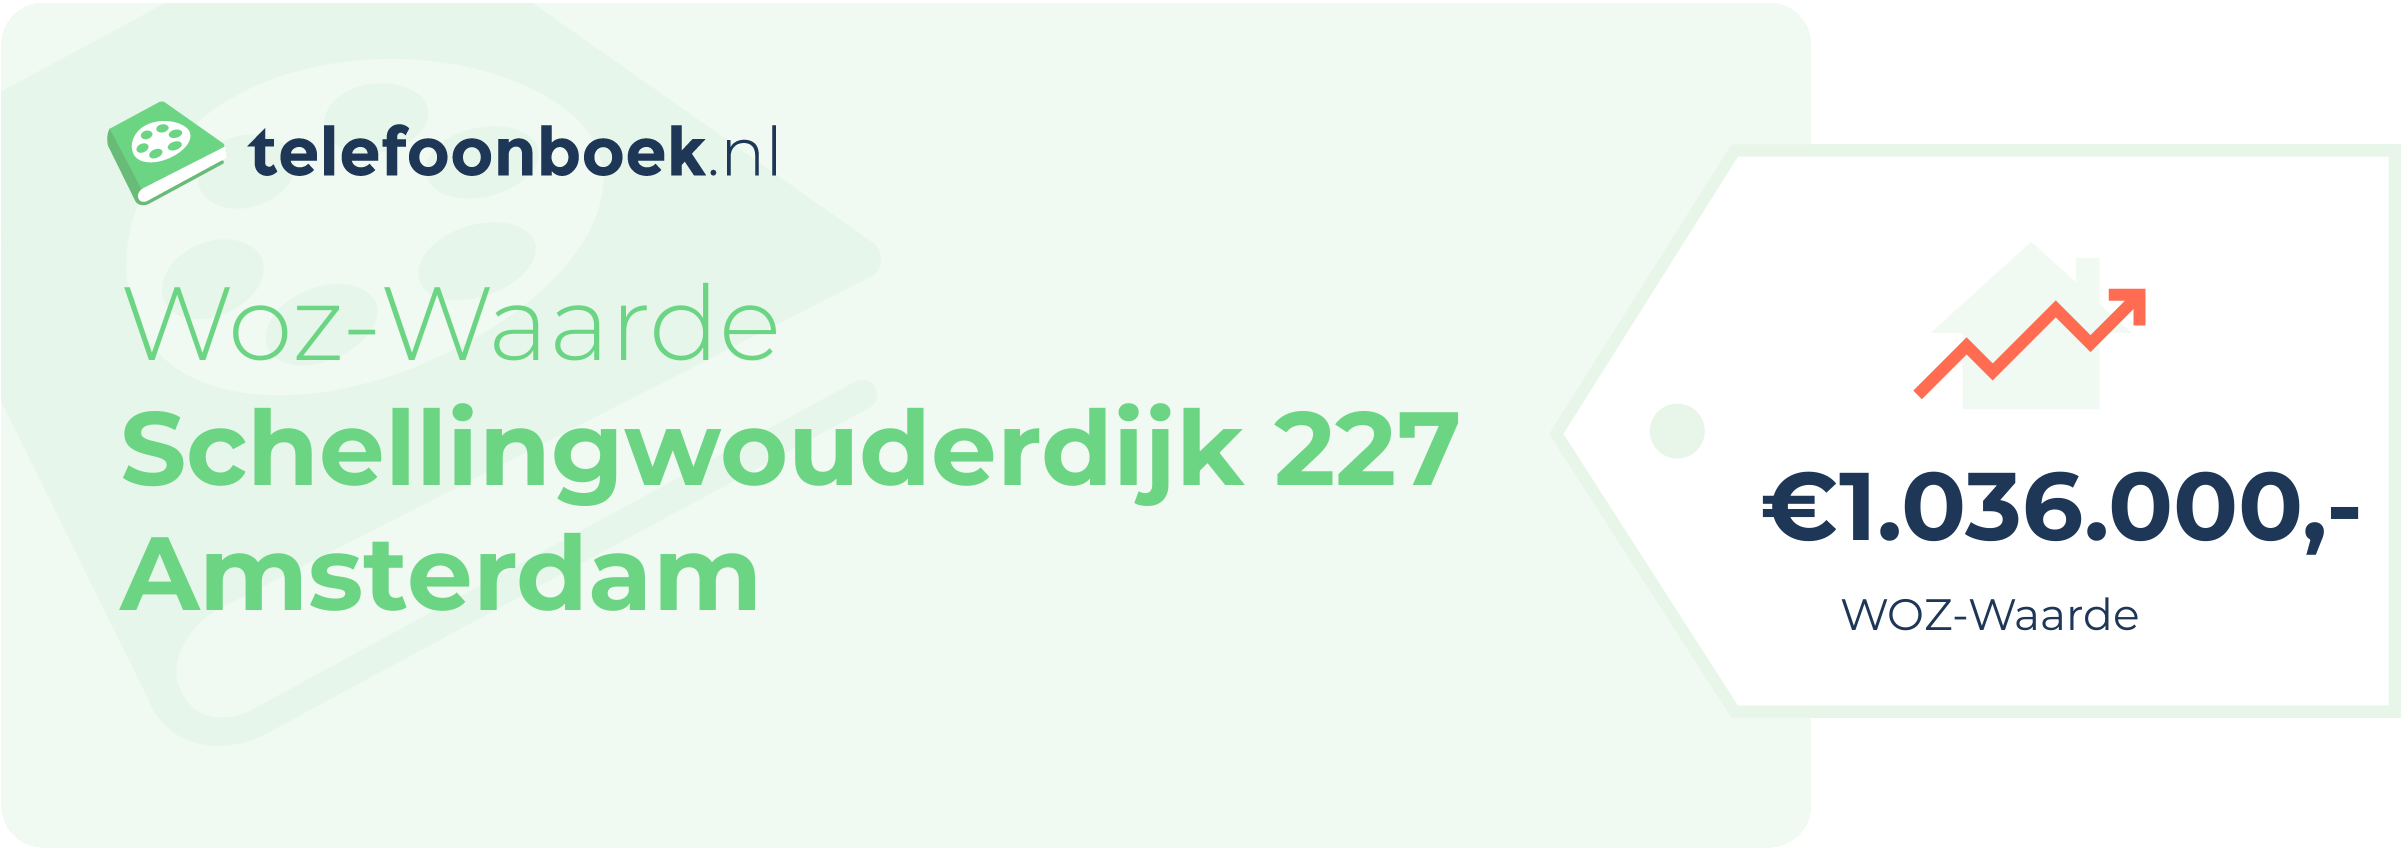 WOZ-waarde Schellingwouderdijk 227 Amsterdam